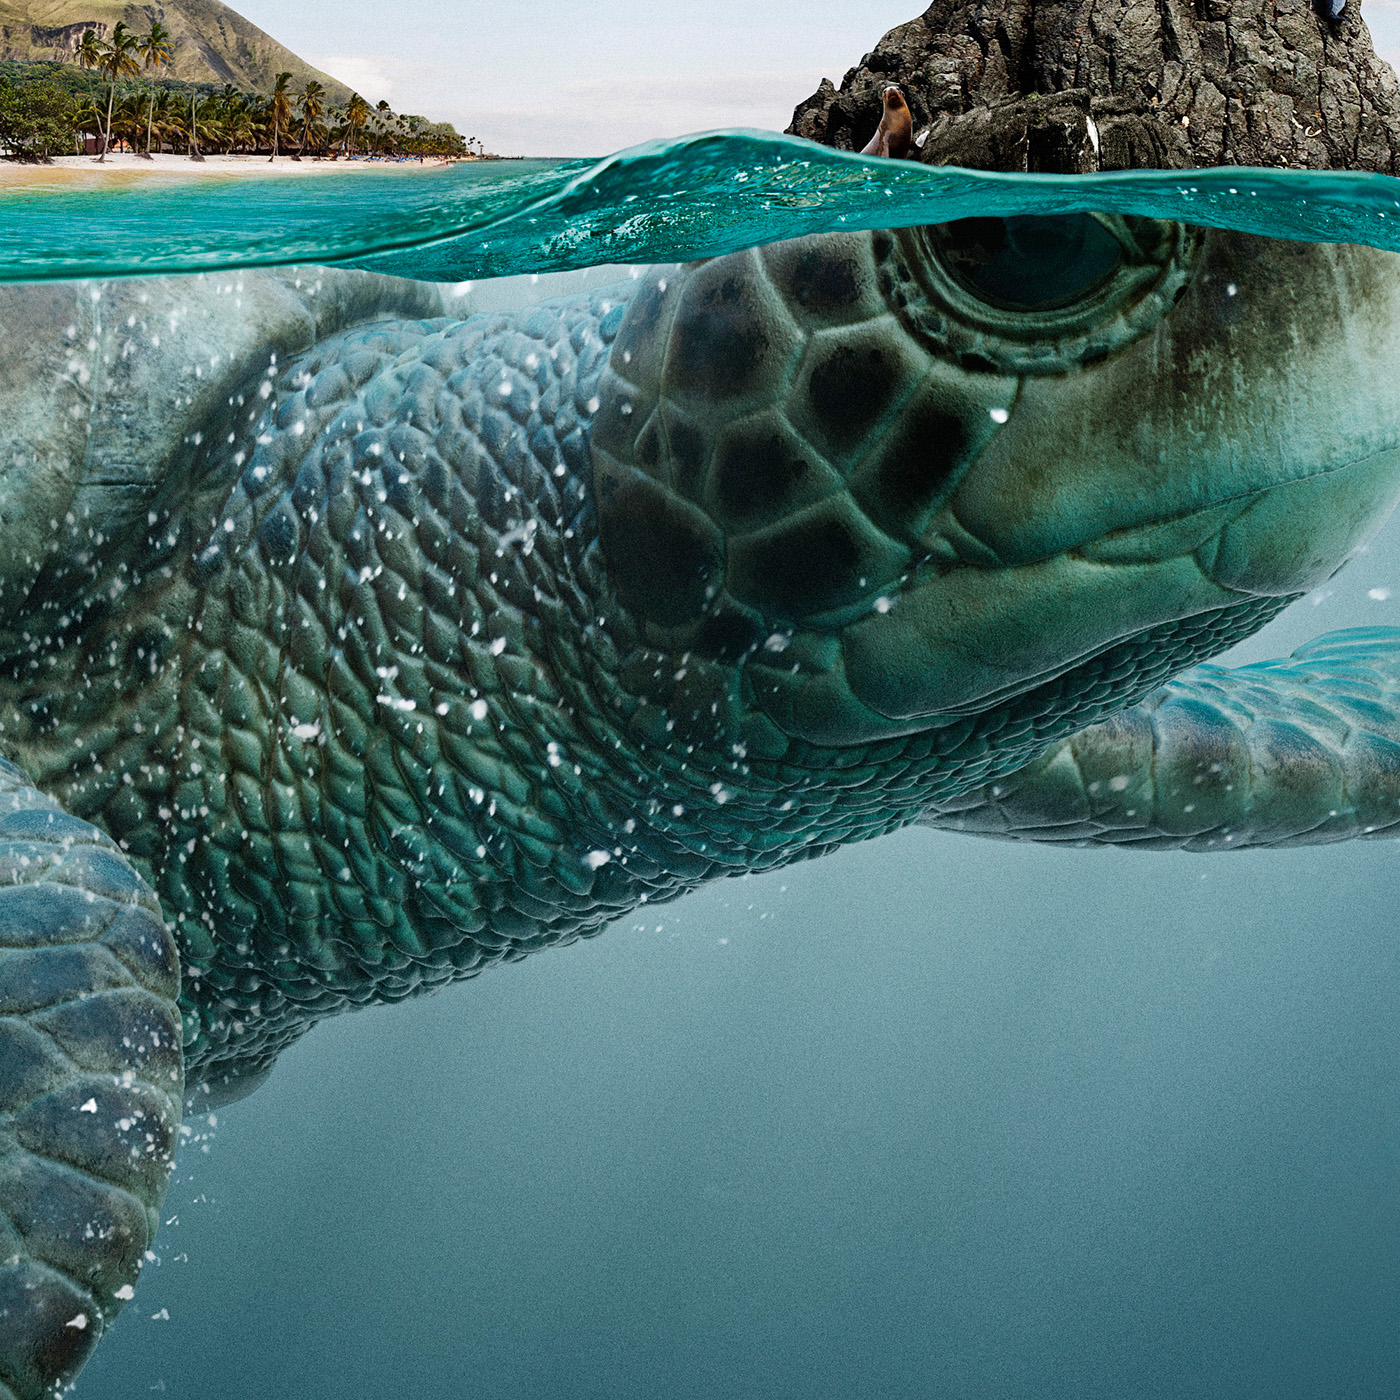 Ecuador tourism animals alligator Cayman ballena Whale Turtle tortuga iguana Galapagos sea